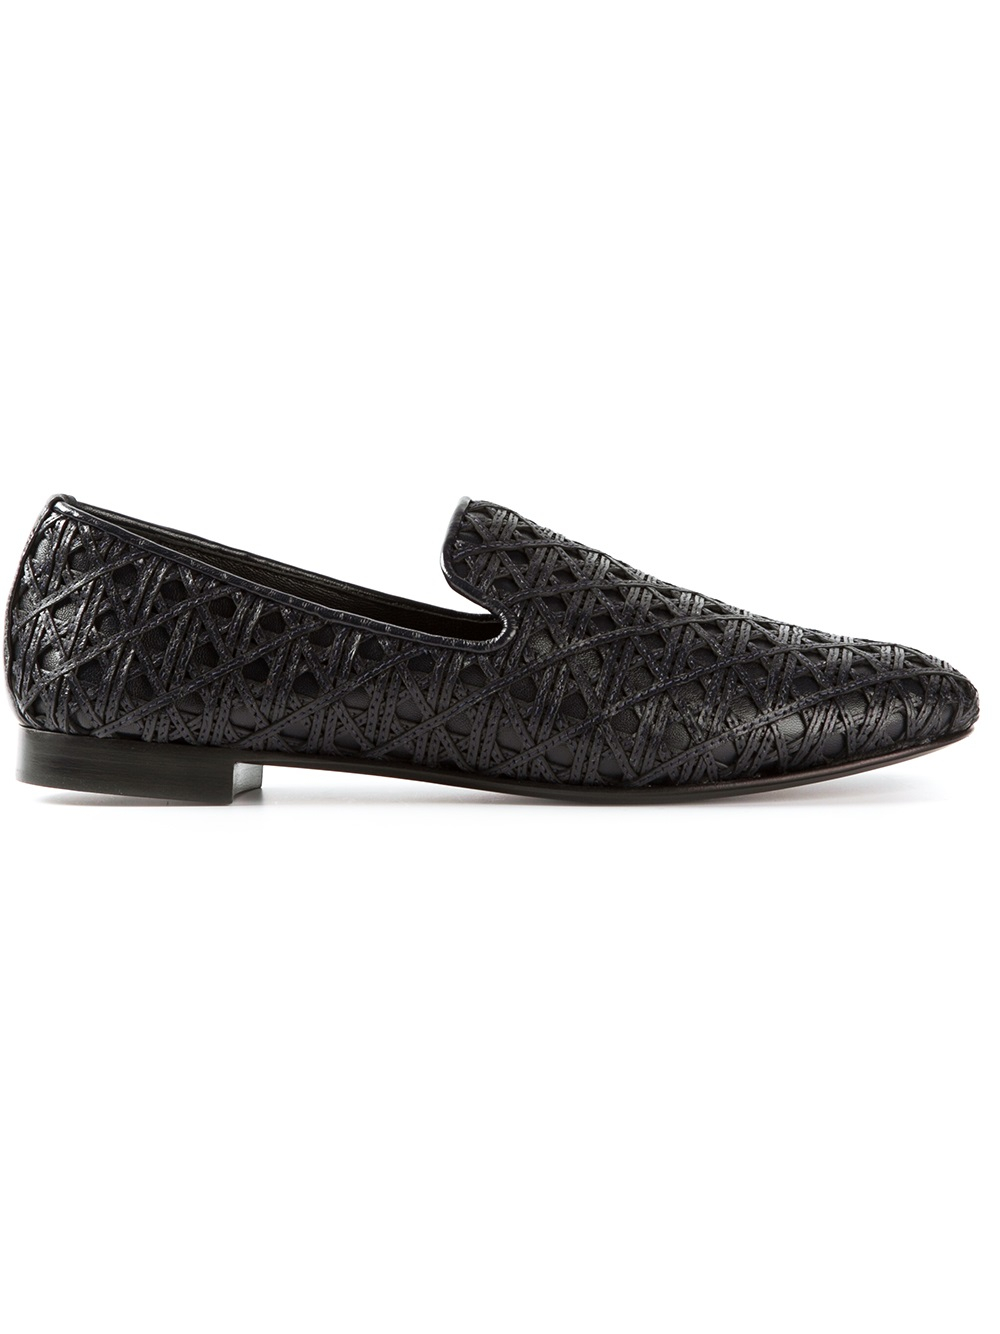 Lyst - Giuseppe Zanotti Woven Leather Loafers in Black for Men